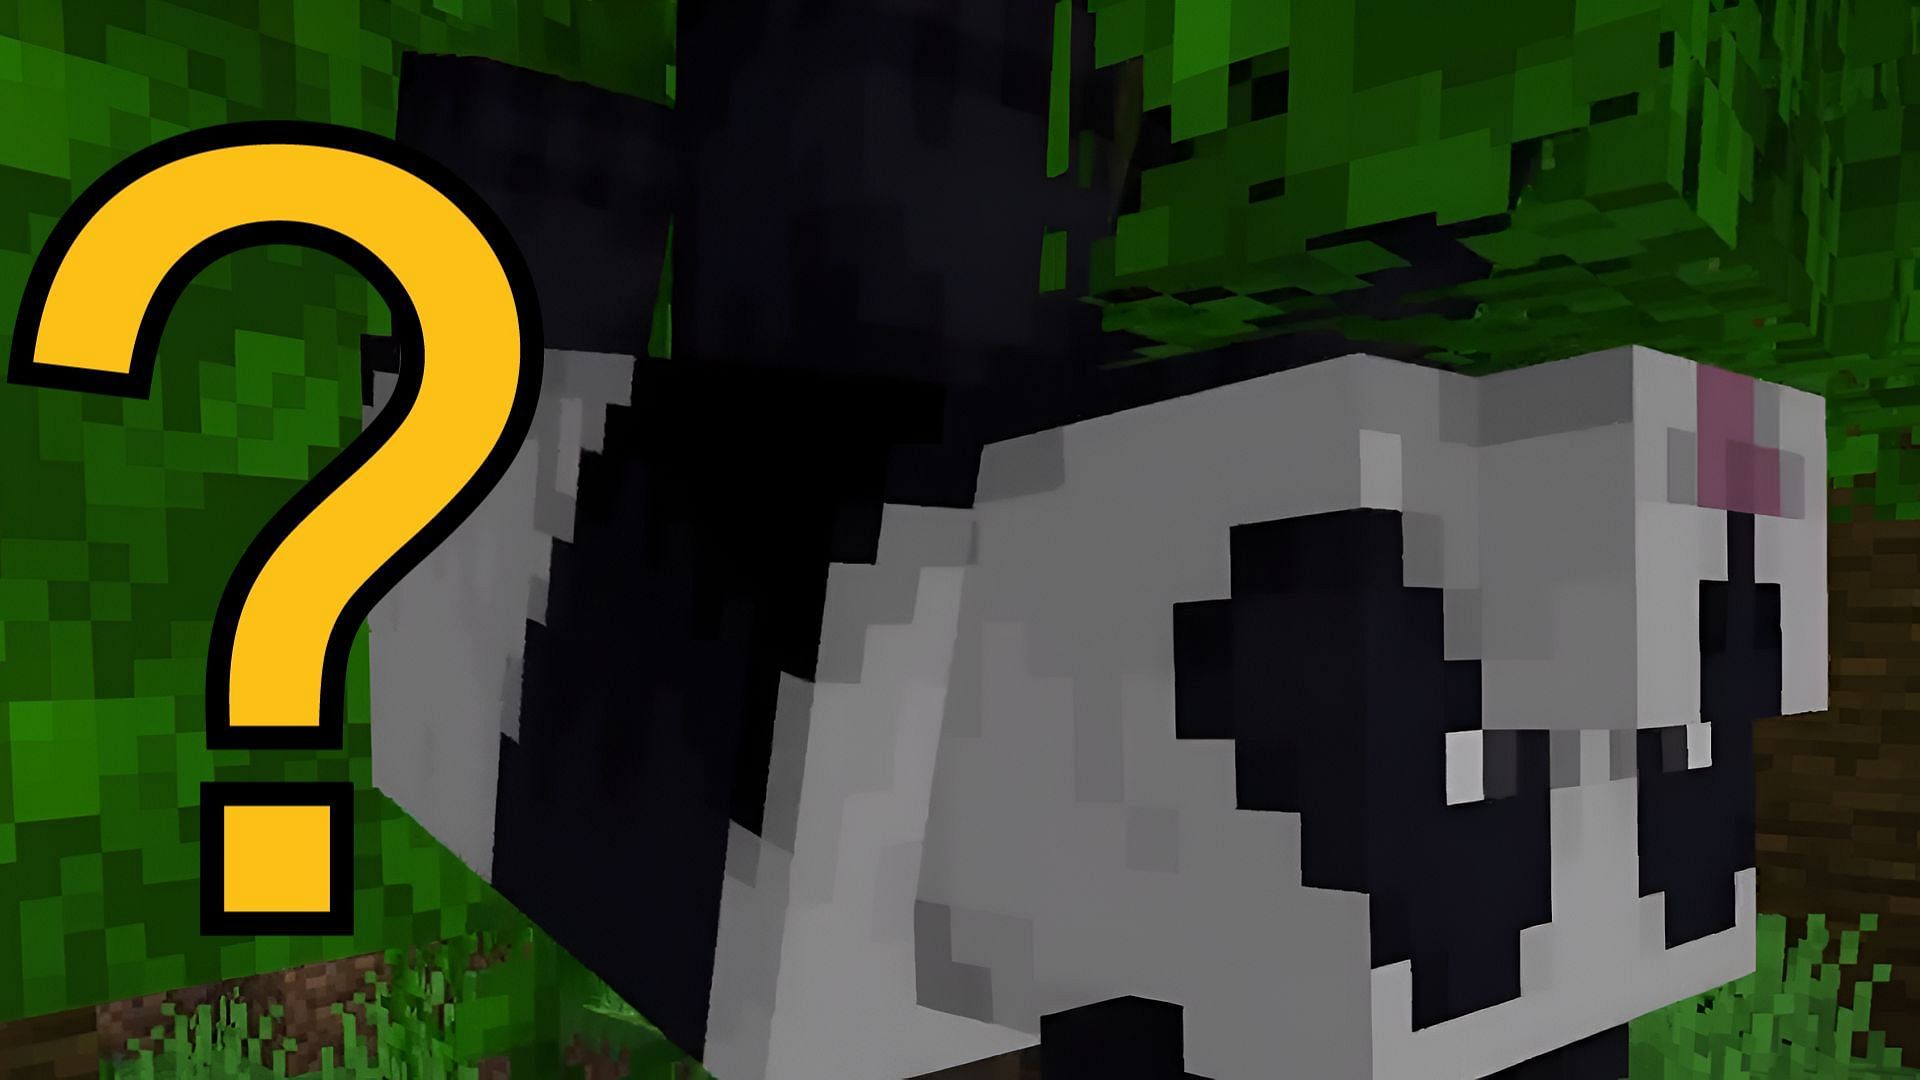 A spinning panda in a jungle biome in Minecraft.